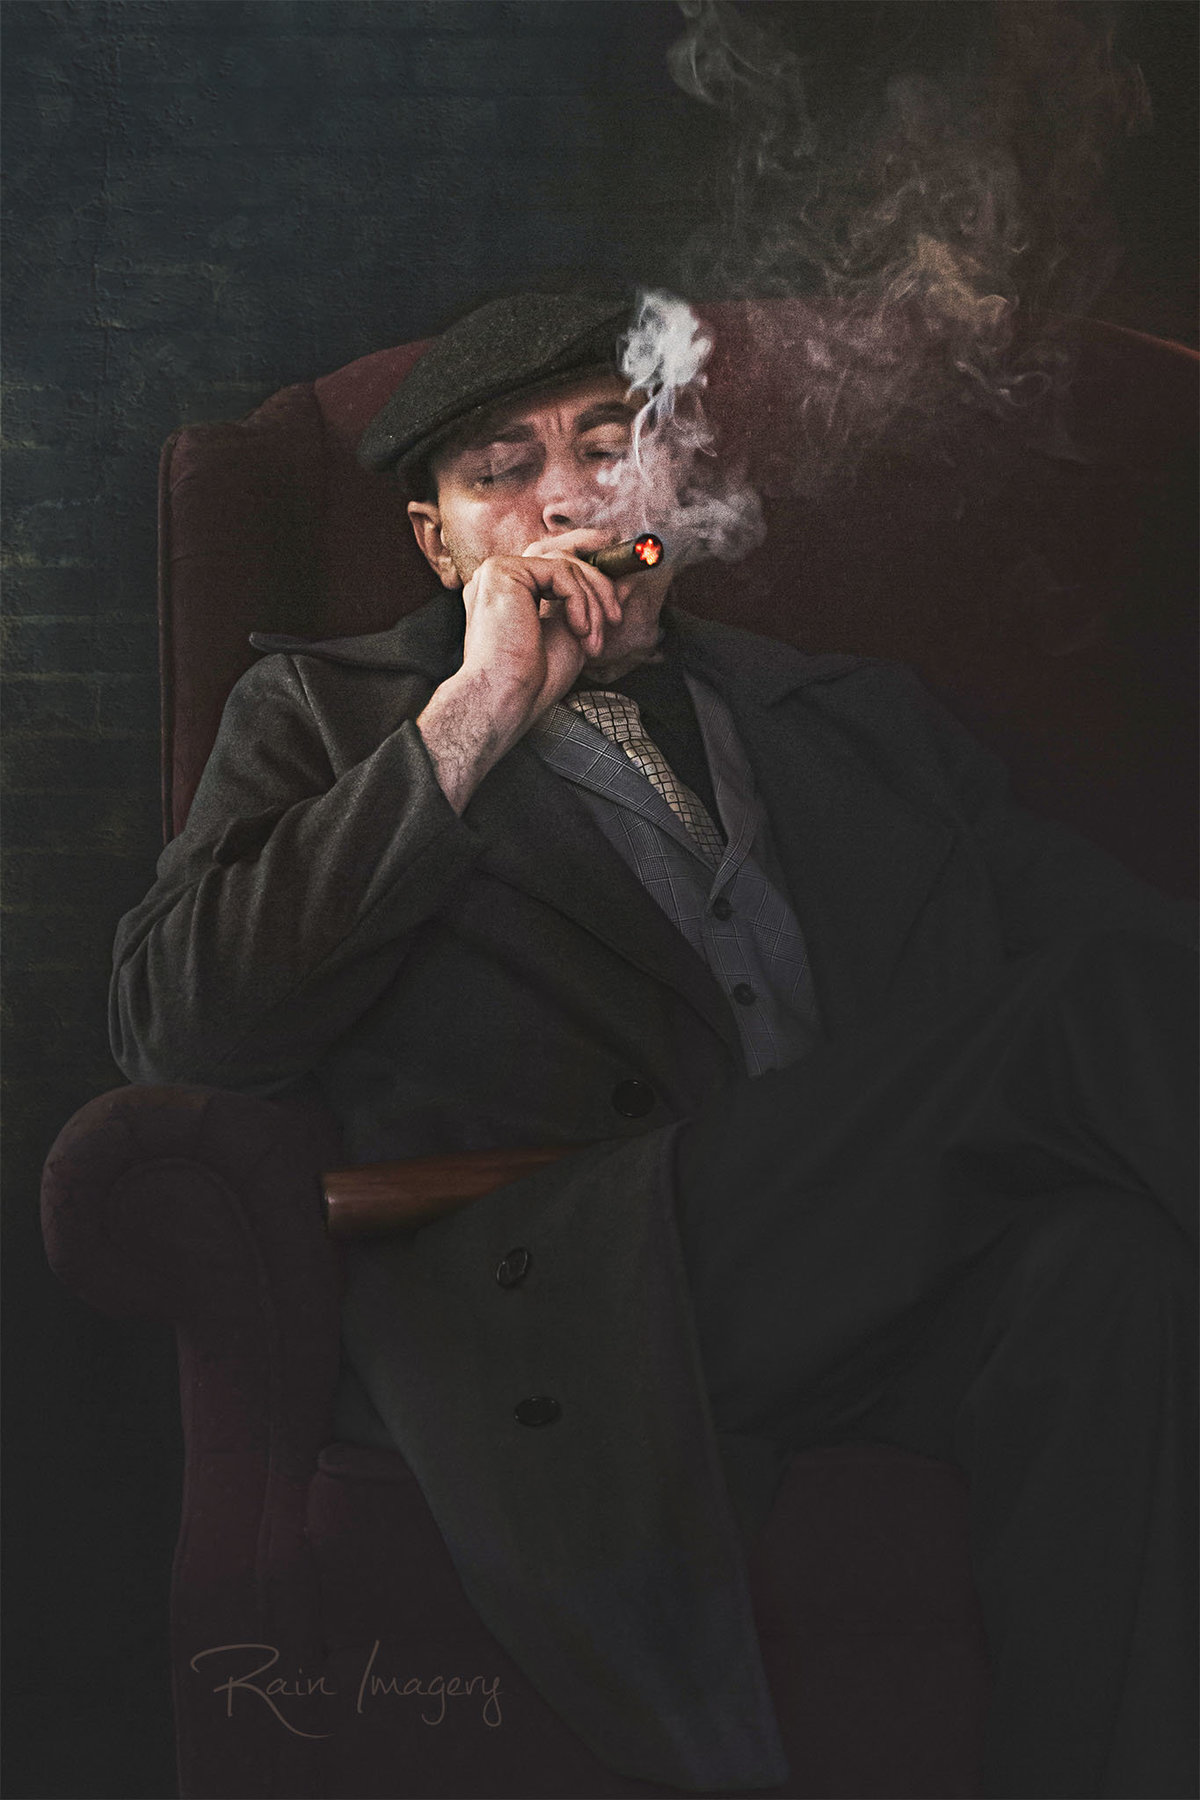 Portrait of a man smoking a cigar